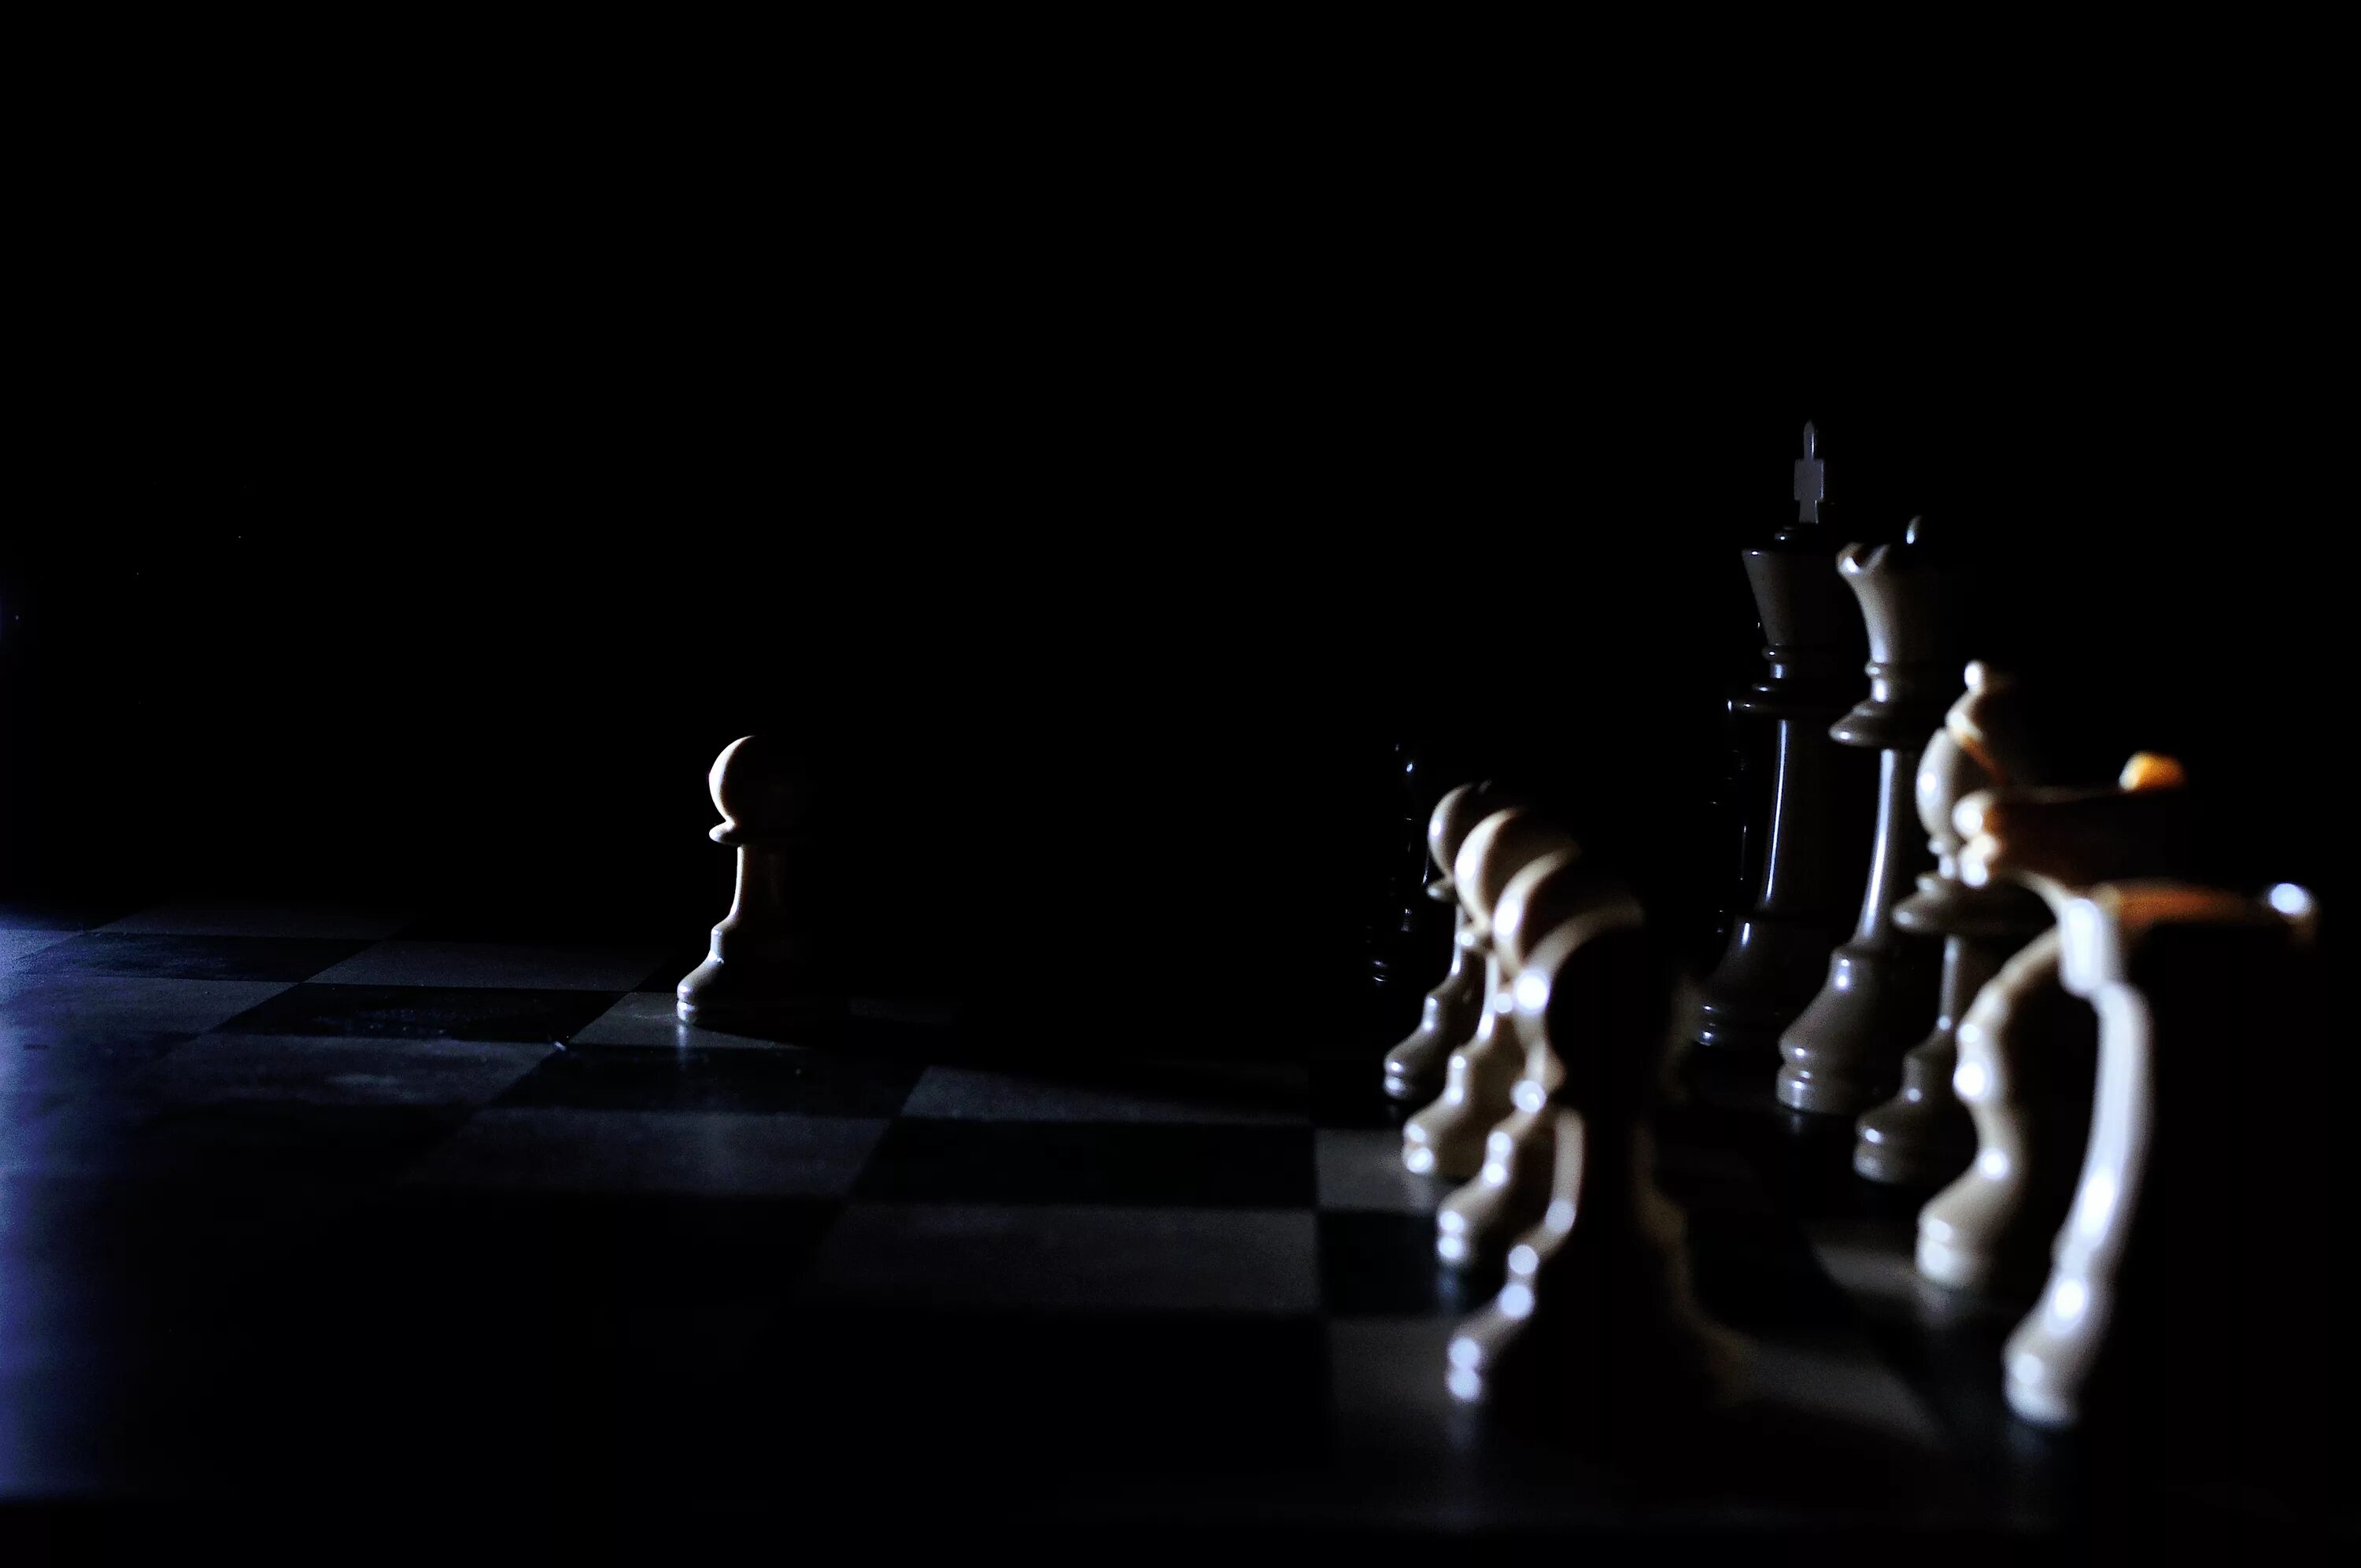 Шахматы на черном фоне. Шахматы в темноте. Шахматная доска в темноте. Шахматные фигуры на темном фоне. Песня шаг в темноту